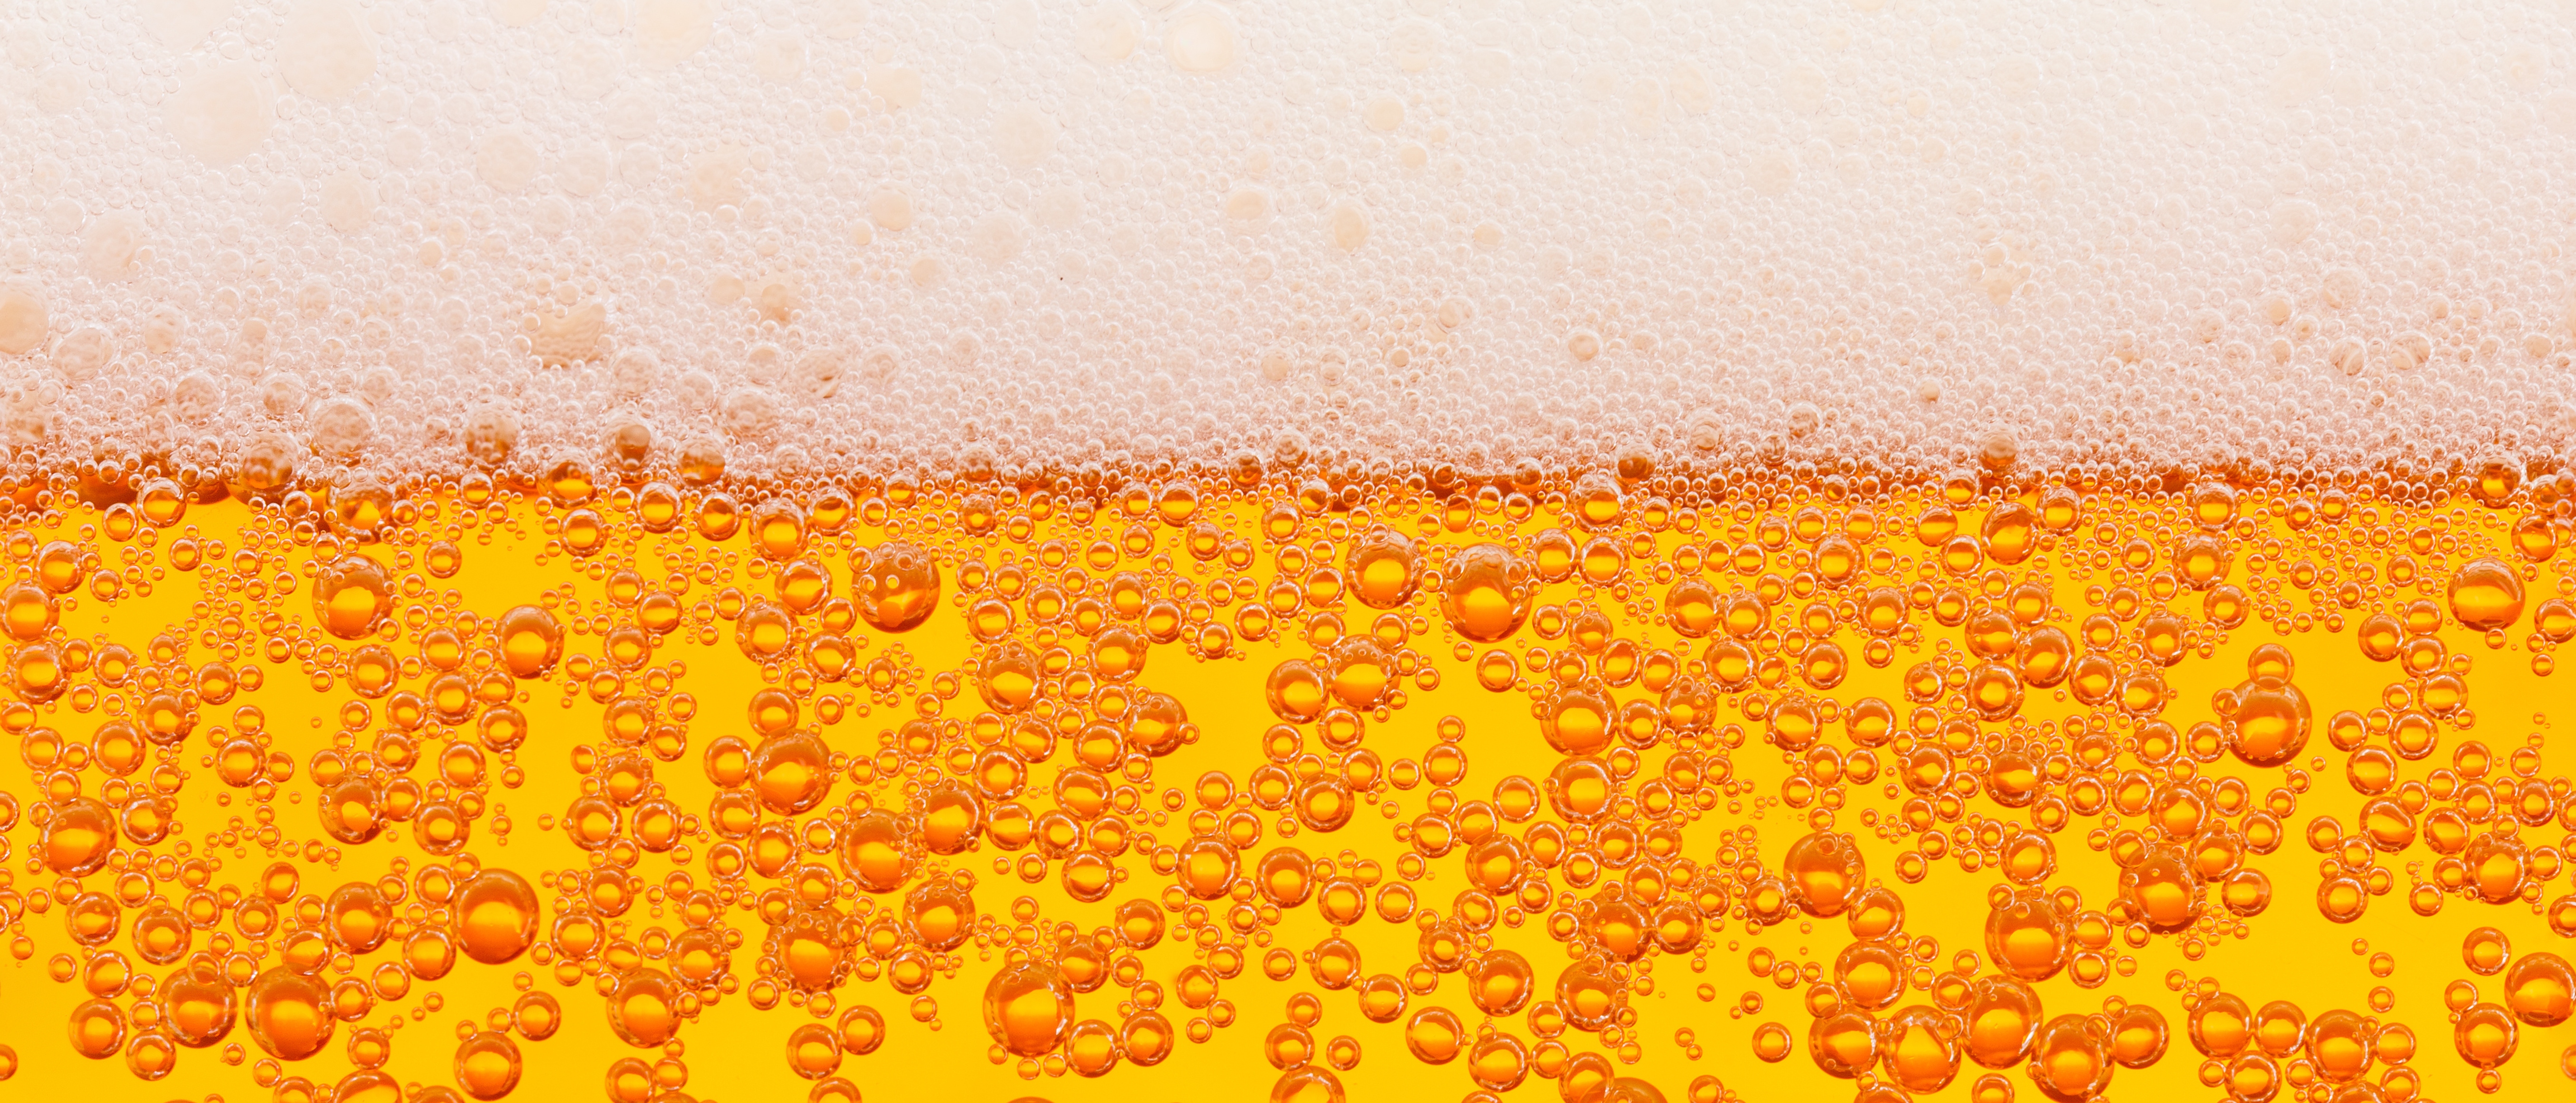 Beer's Hops May Help Slow Alzheimer's, Parkinson's Development